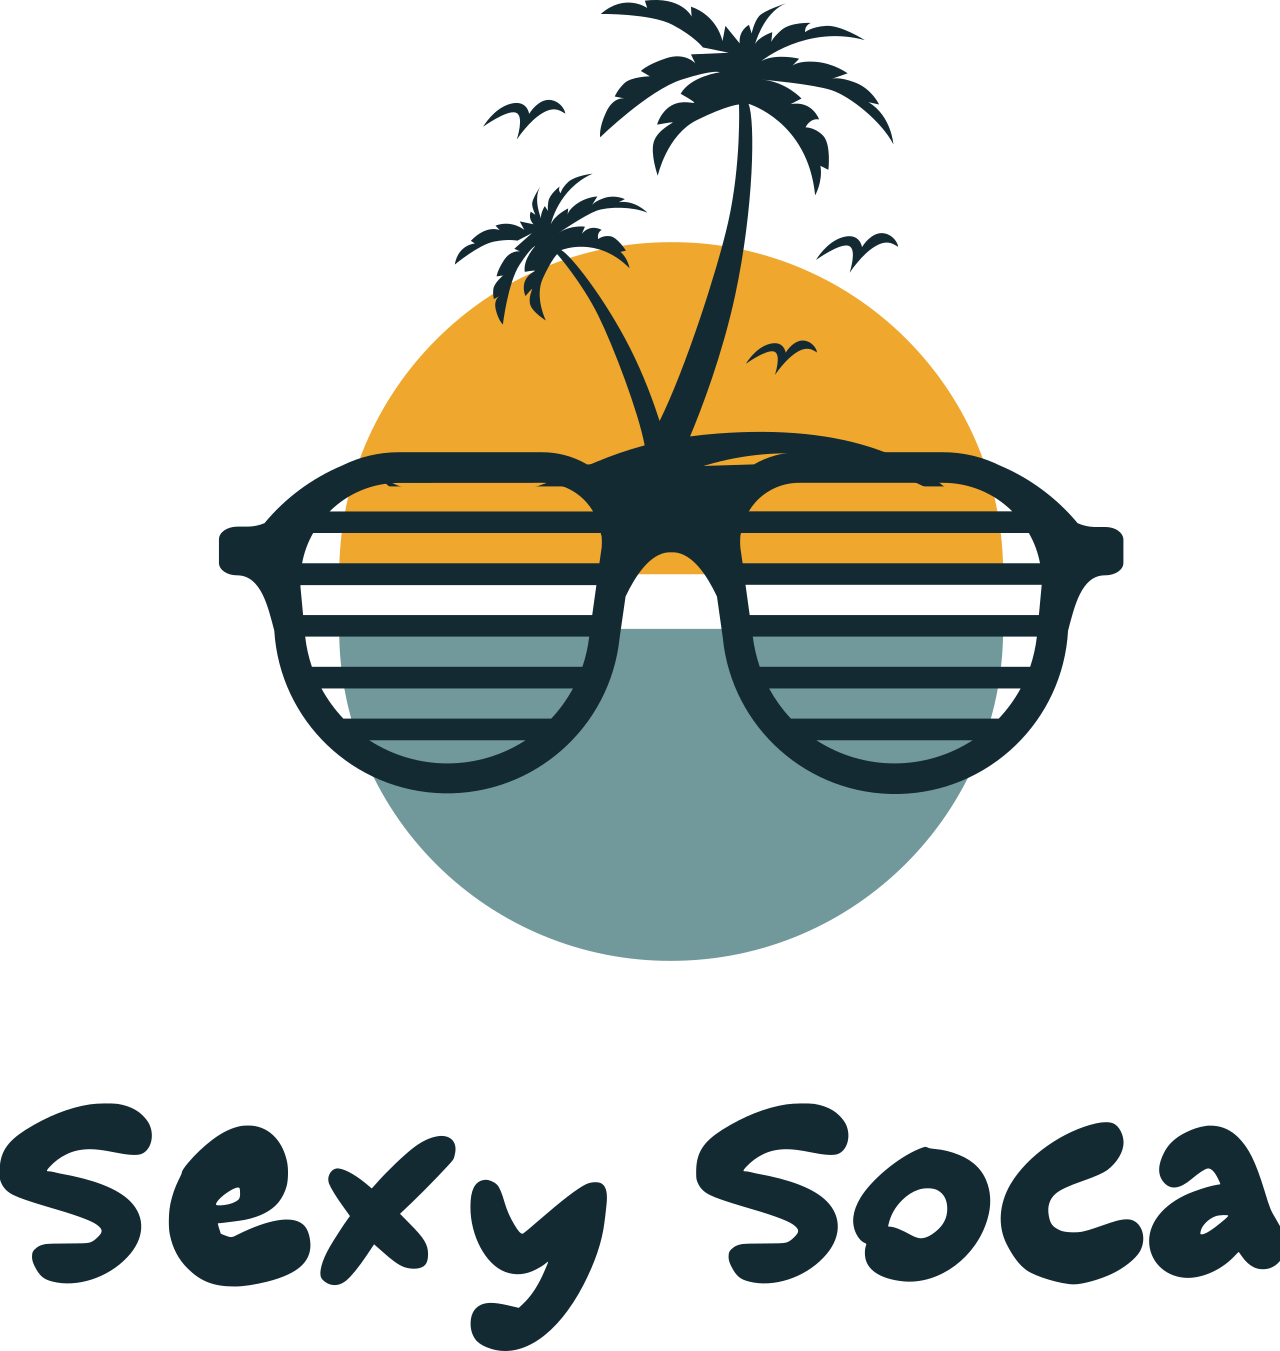 Sexy SoCal's logo